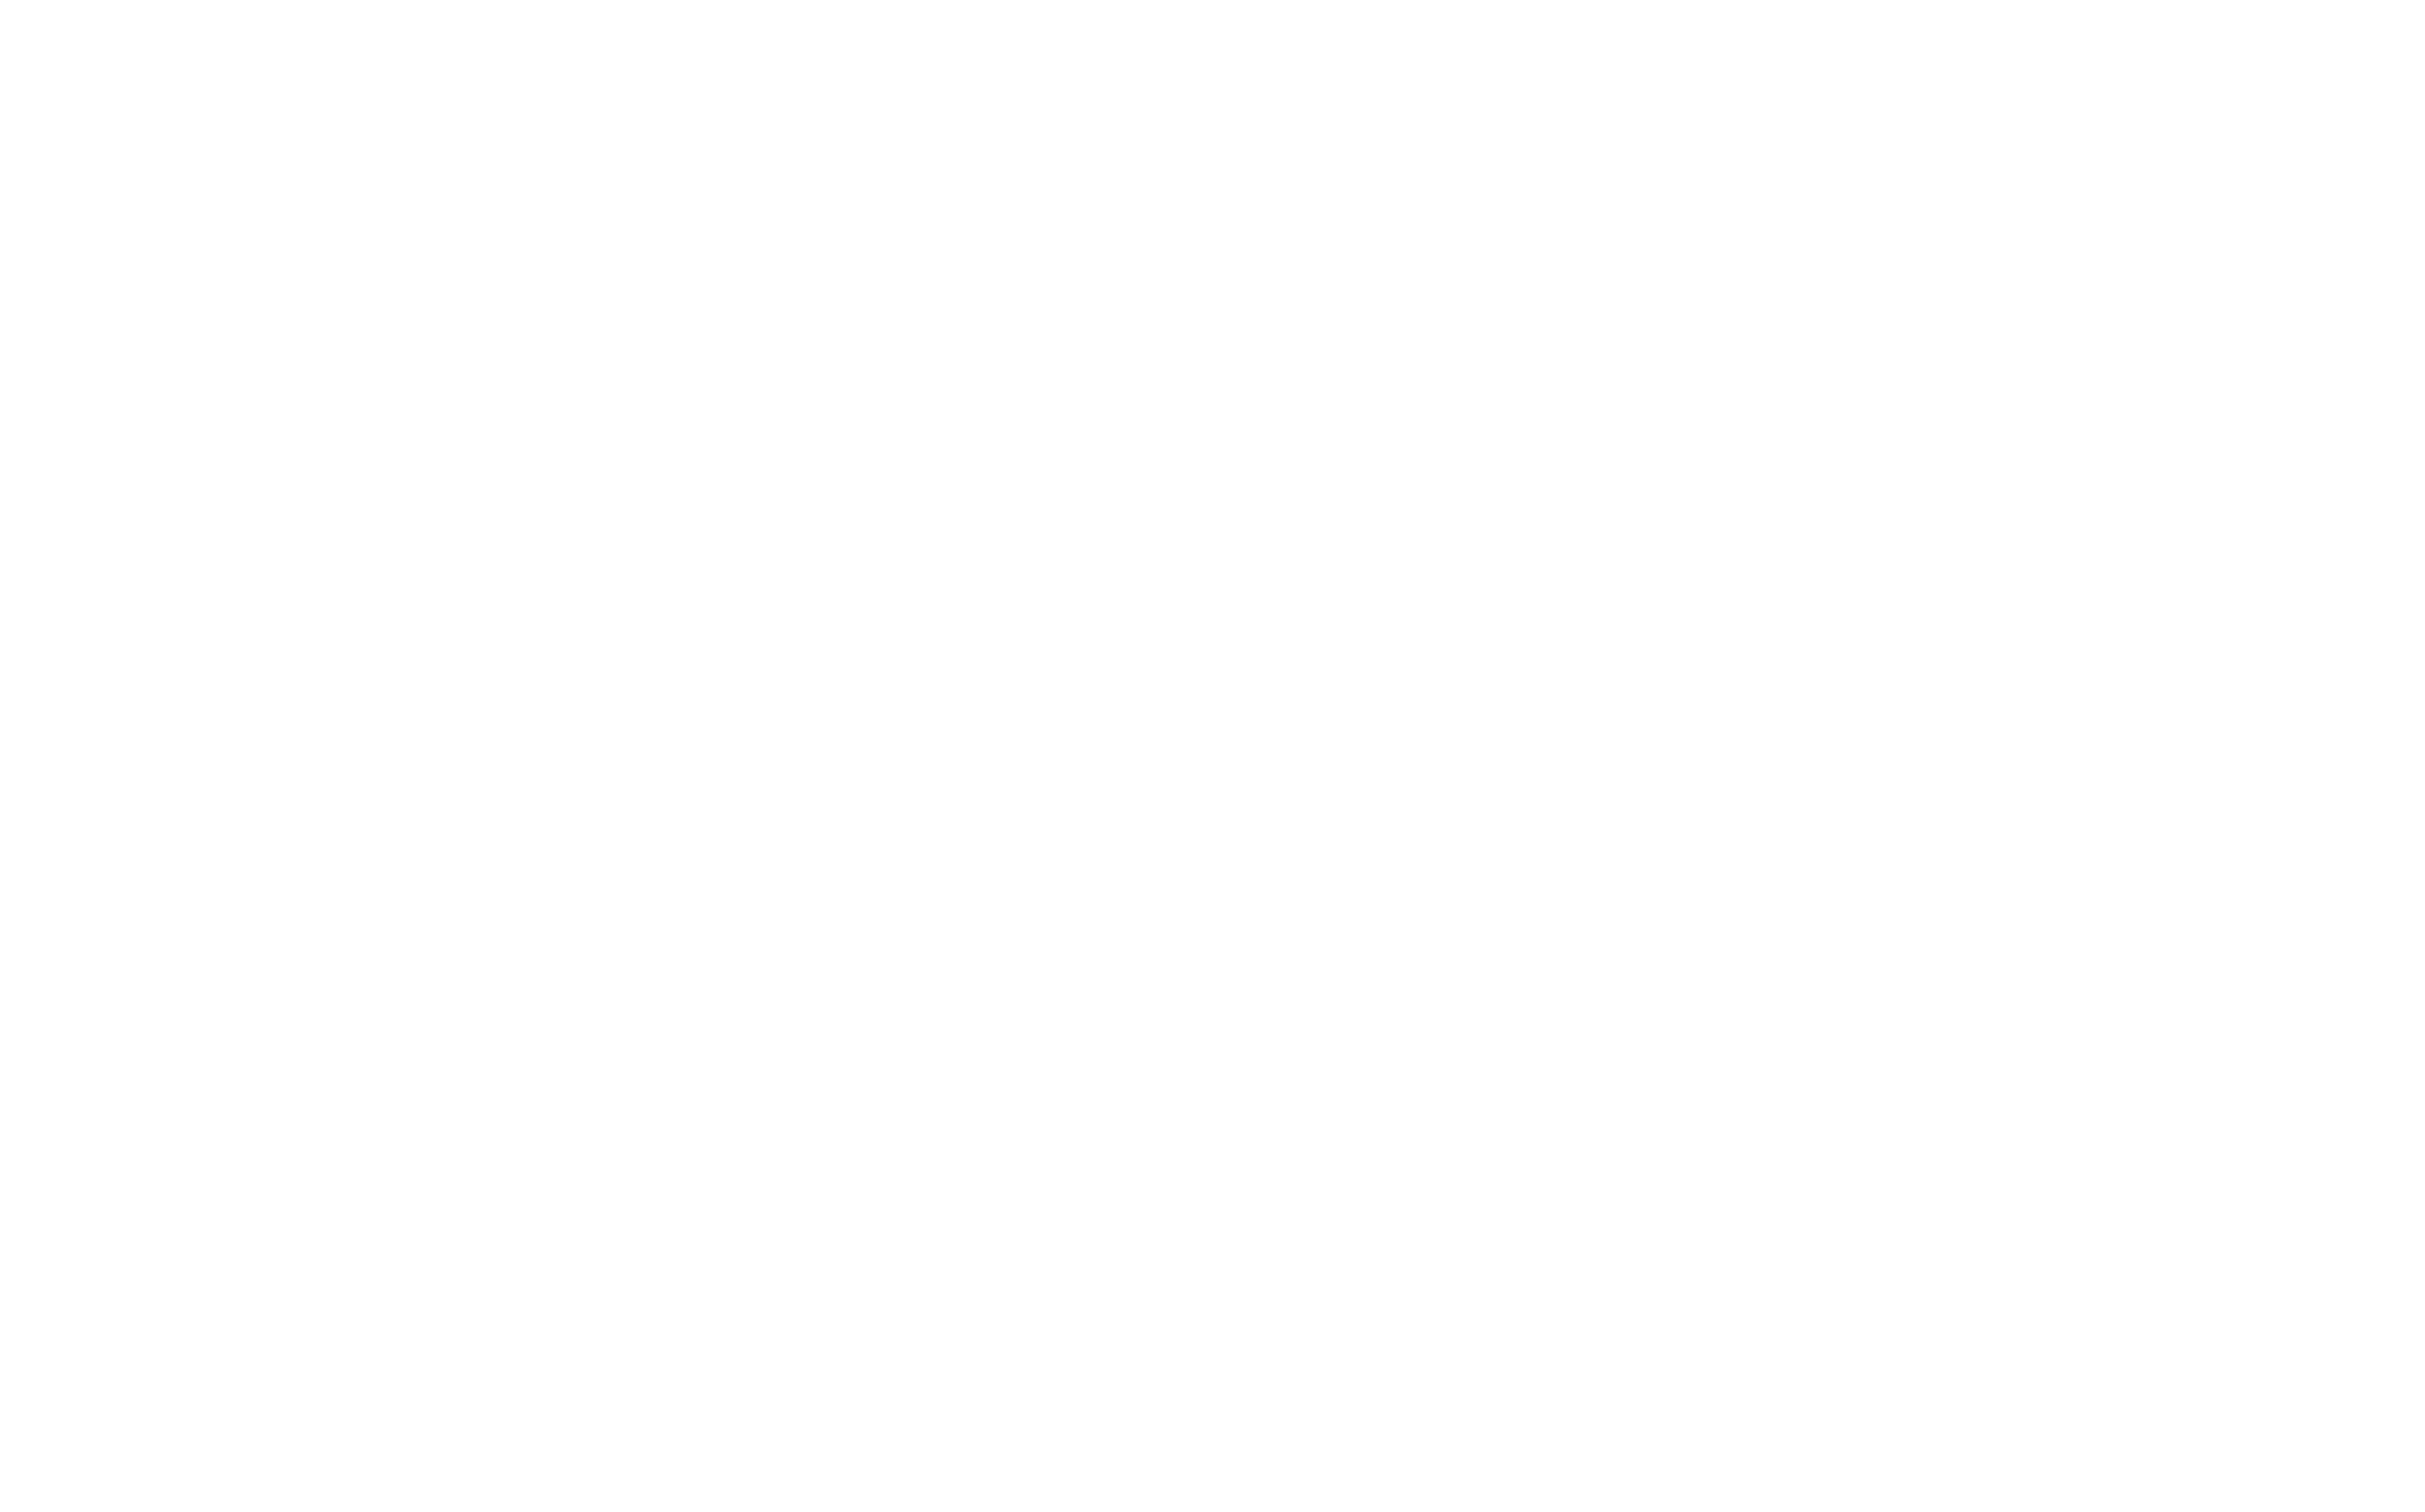 archdaily-logo